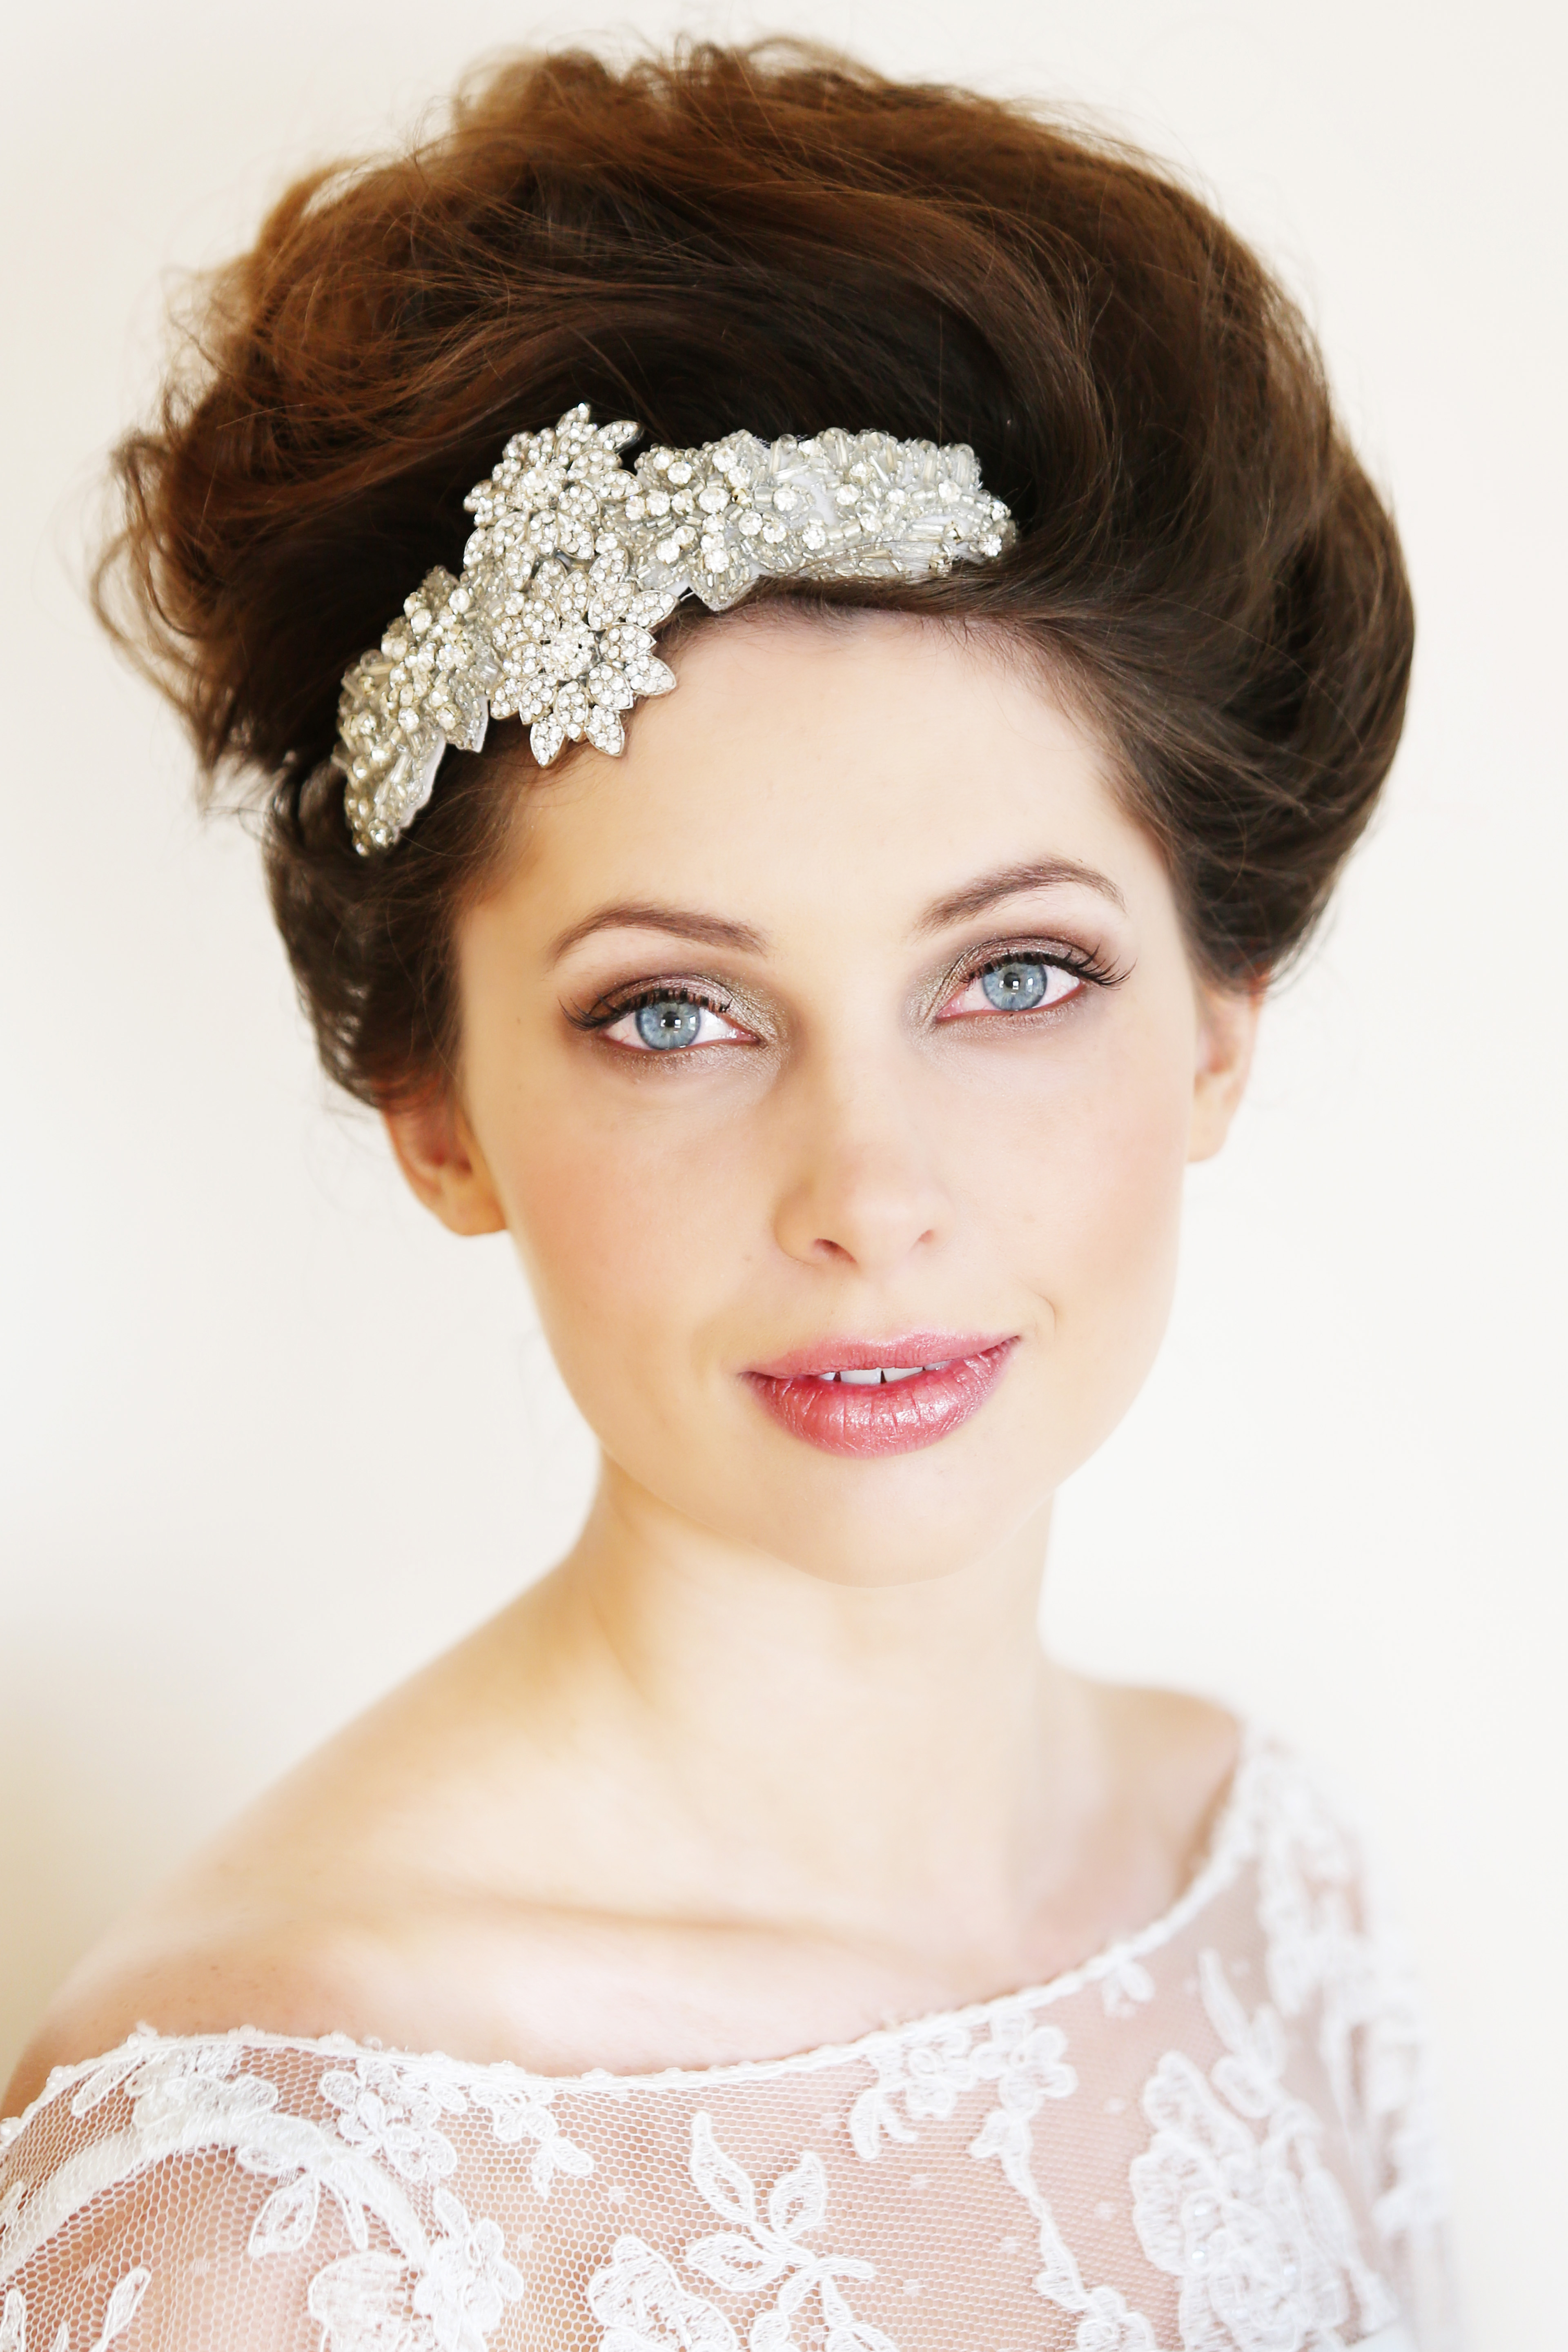 Make-up and Hair created for Brampton Grange wedding photo shoot